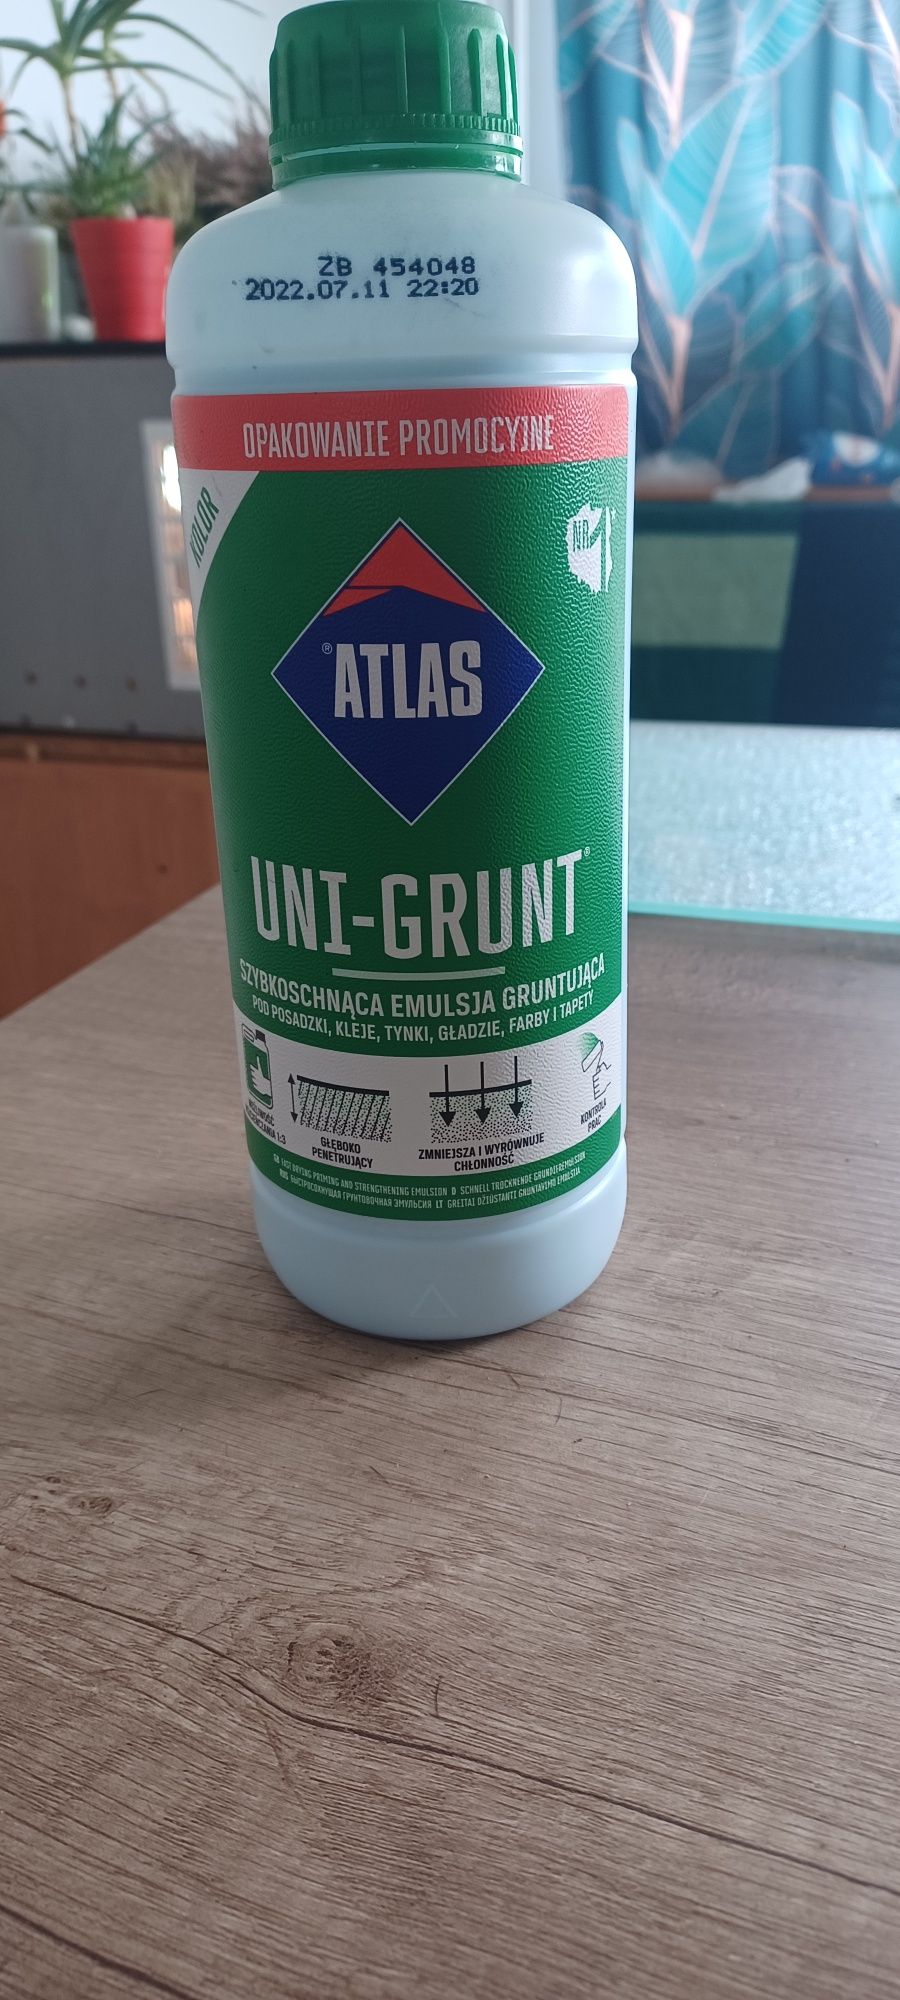 Unigrunt 1kg butelka Uni-grunt Atlas grunt